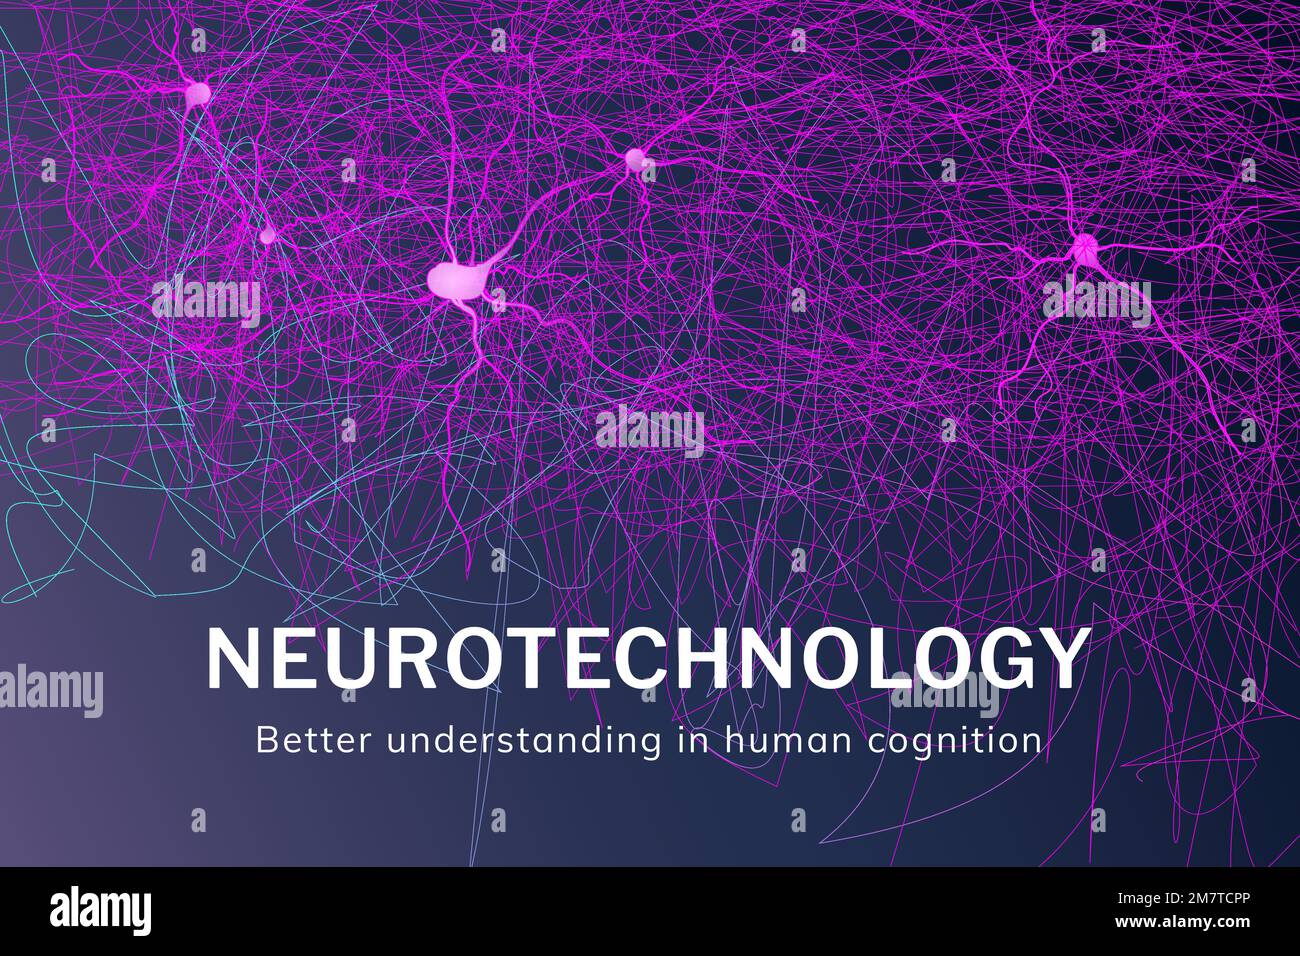 https://c8.alamy.com/comp/2M7TCPP/neurotechnology-smart-healthcare-template-vector-2M7TCPP.jpg